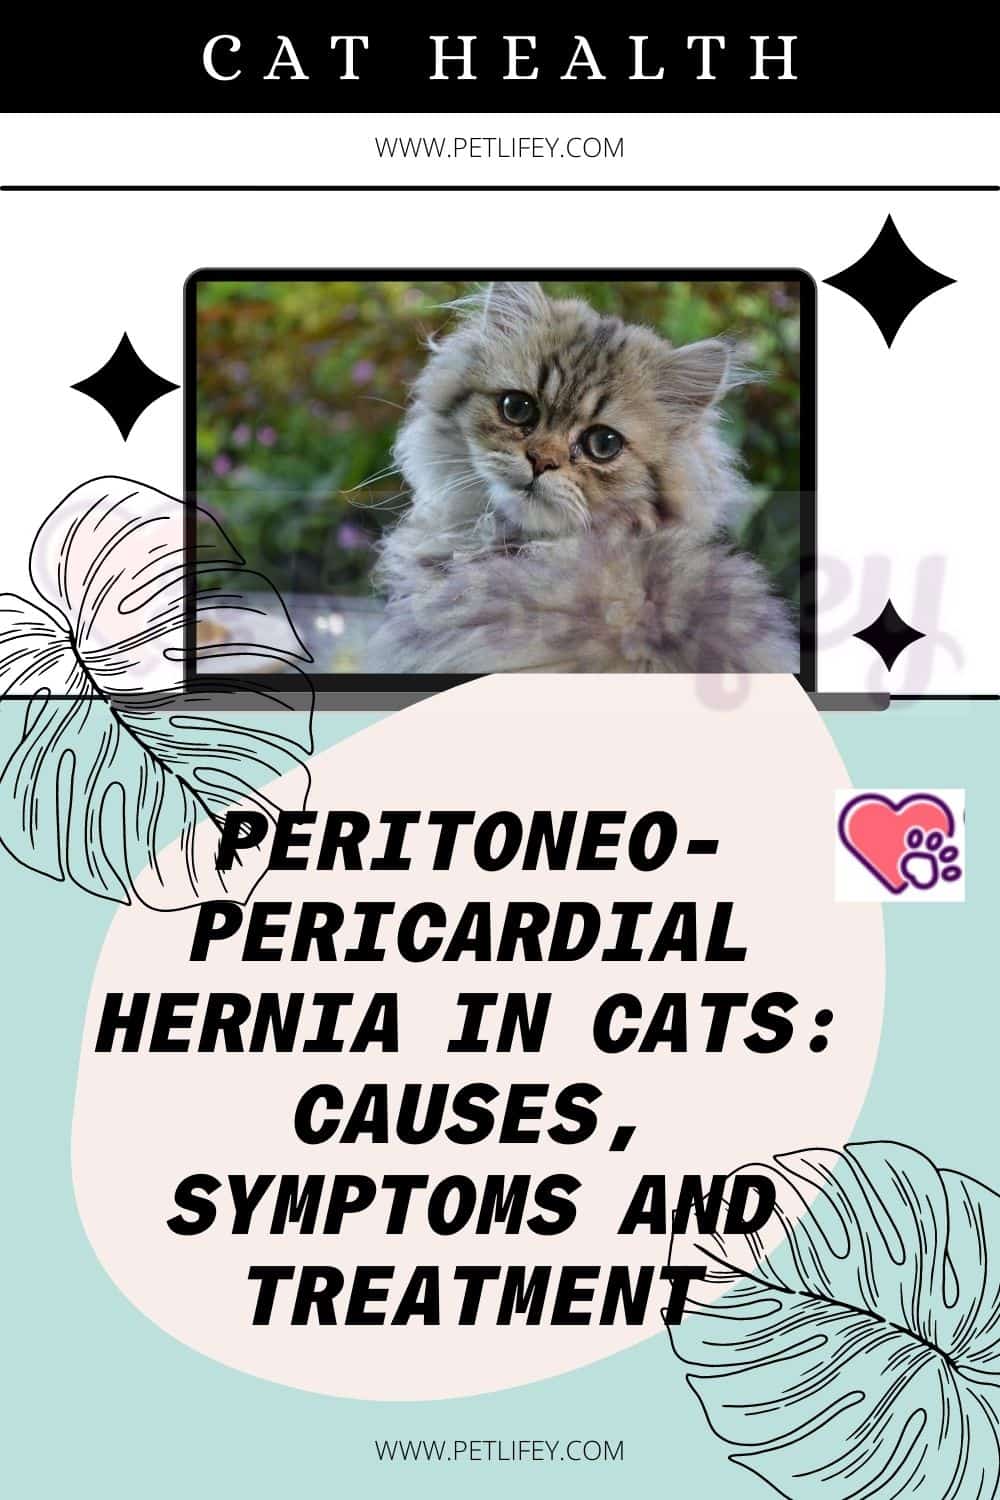 Peritoneo-pericardial hernia